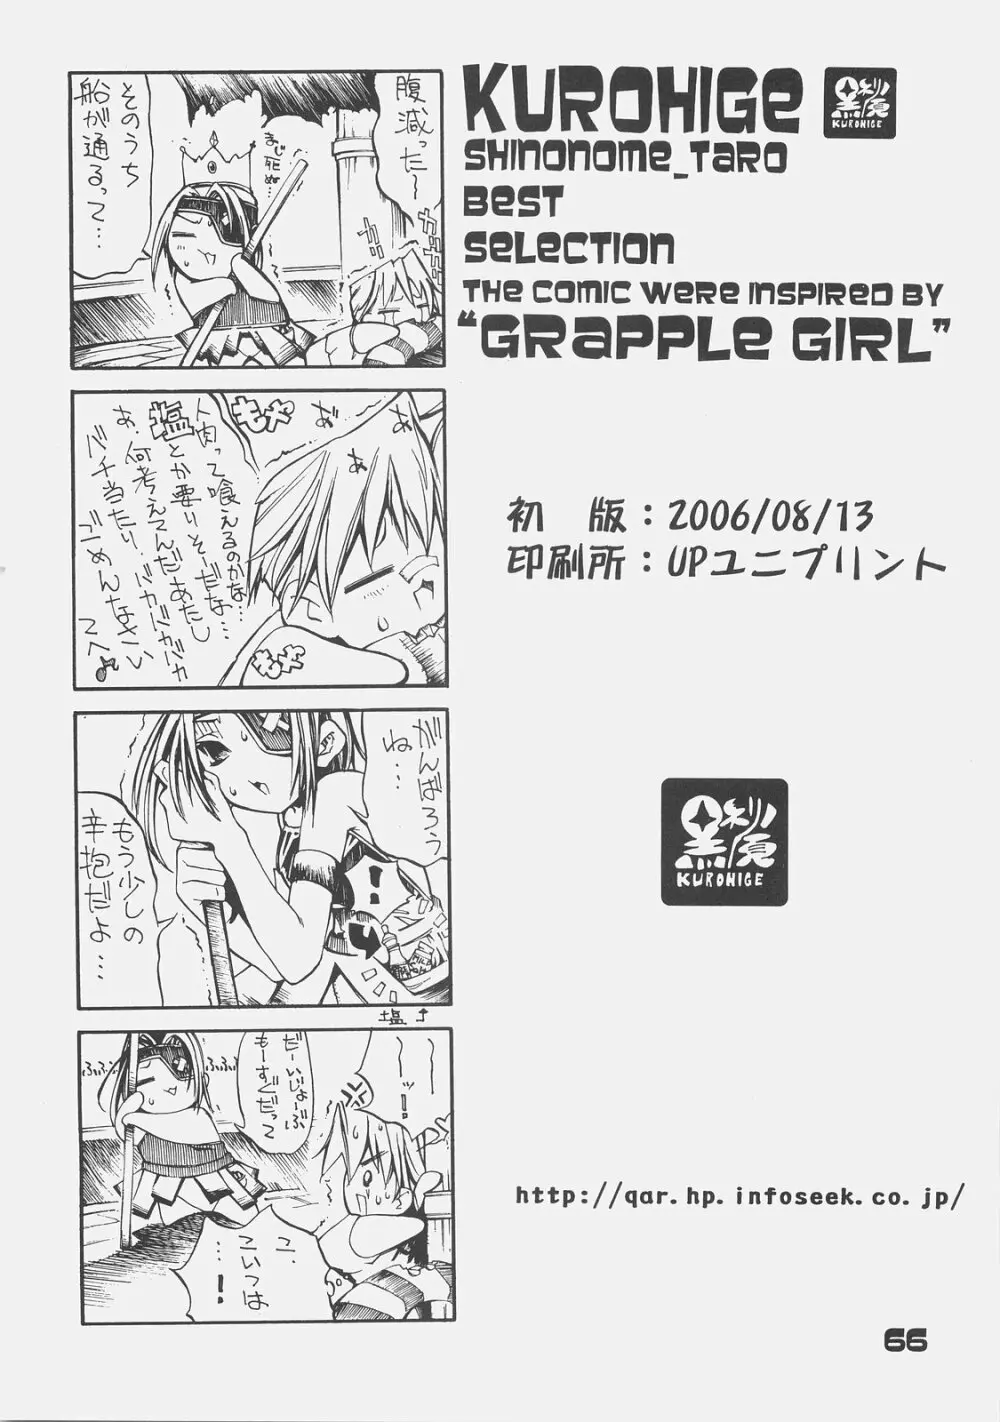 KUROHIGE SHINONOME TARO BEST SELECTION GRAPPLE GIRL Page.65